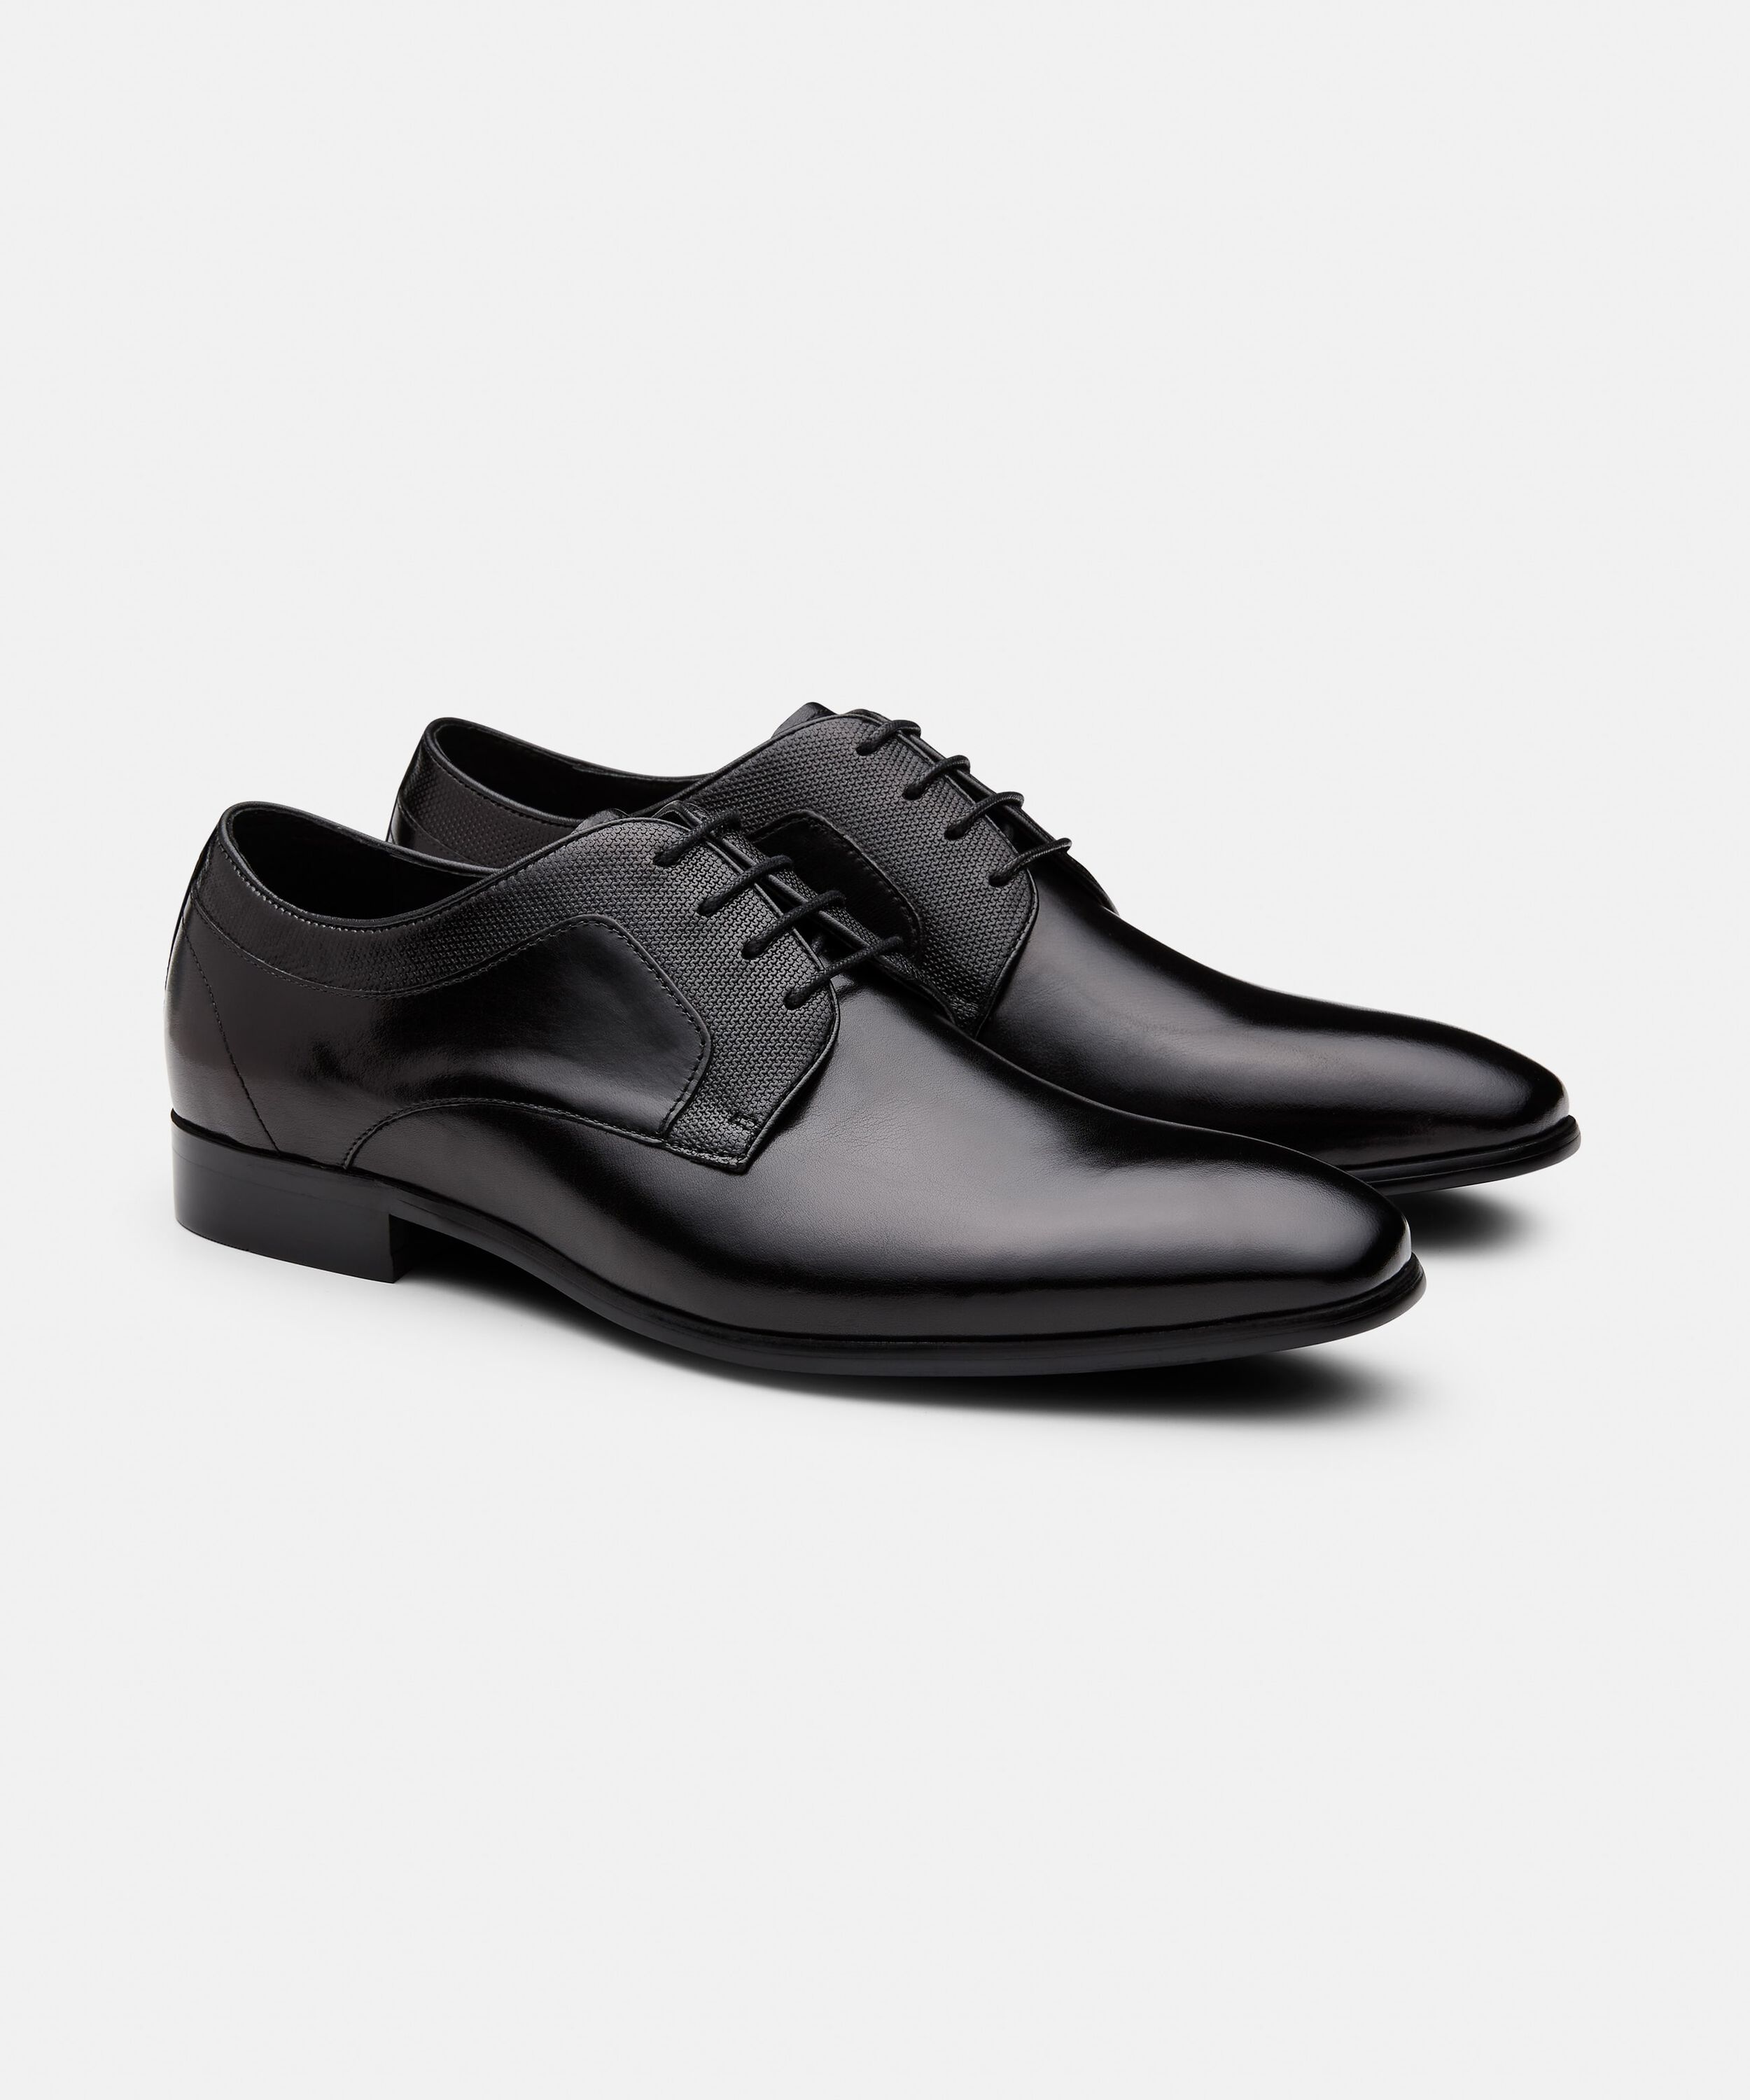 Leather Derby Dress Shoe - Black, Formal Shoes